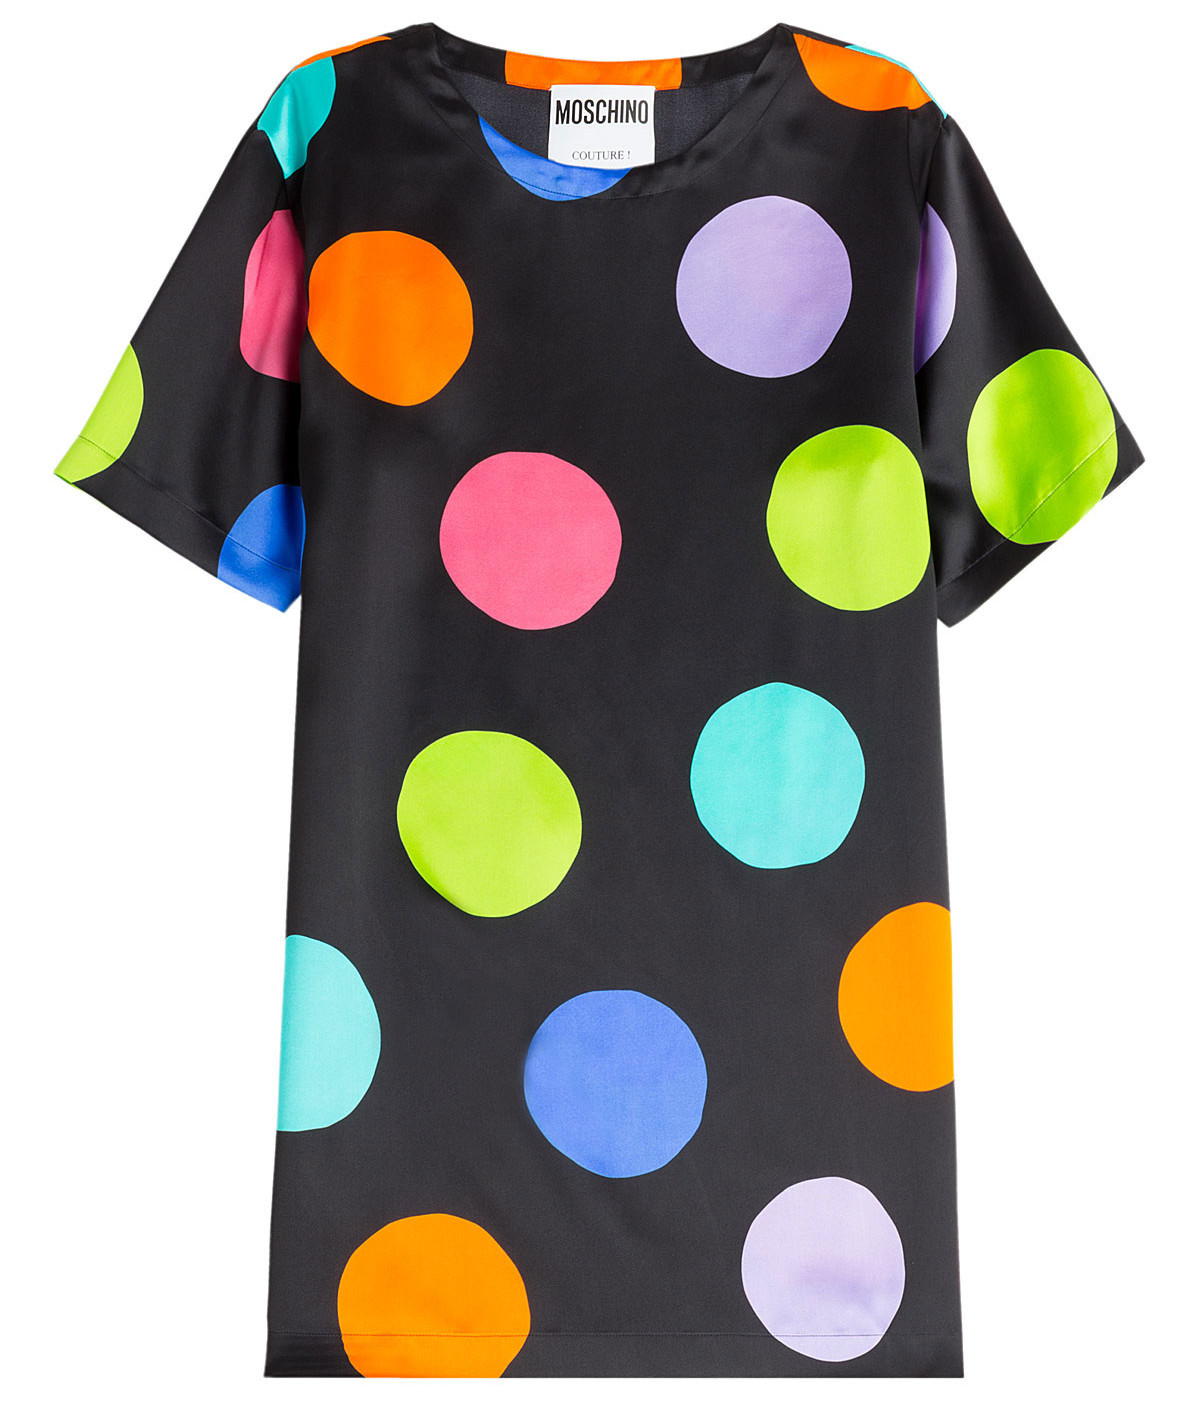 Moschino Black silk dress multicolored polka dots